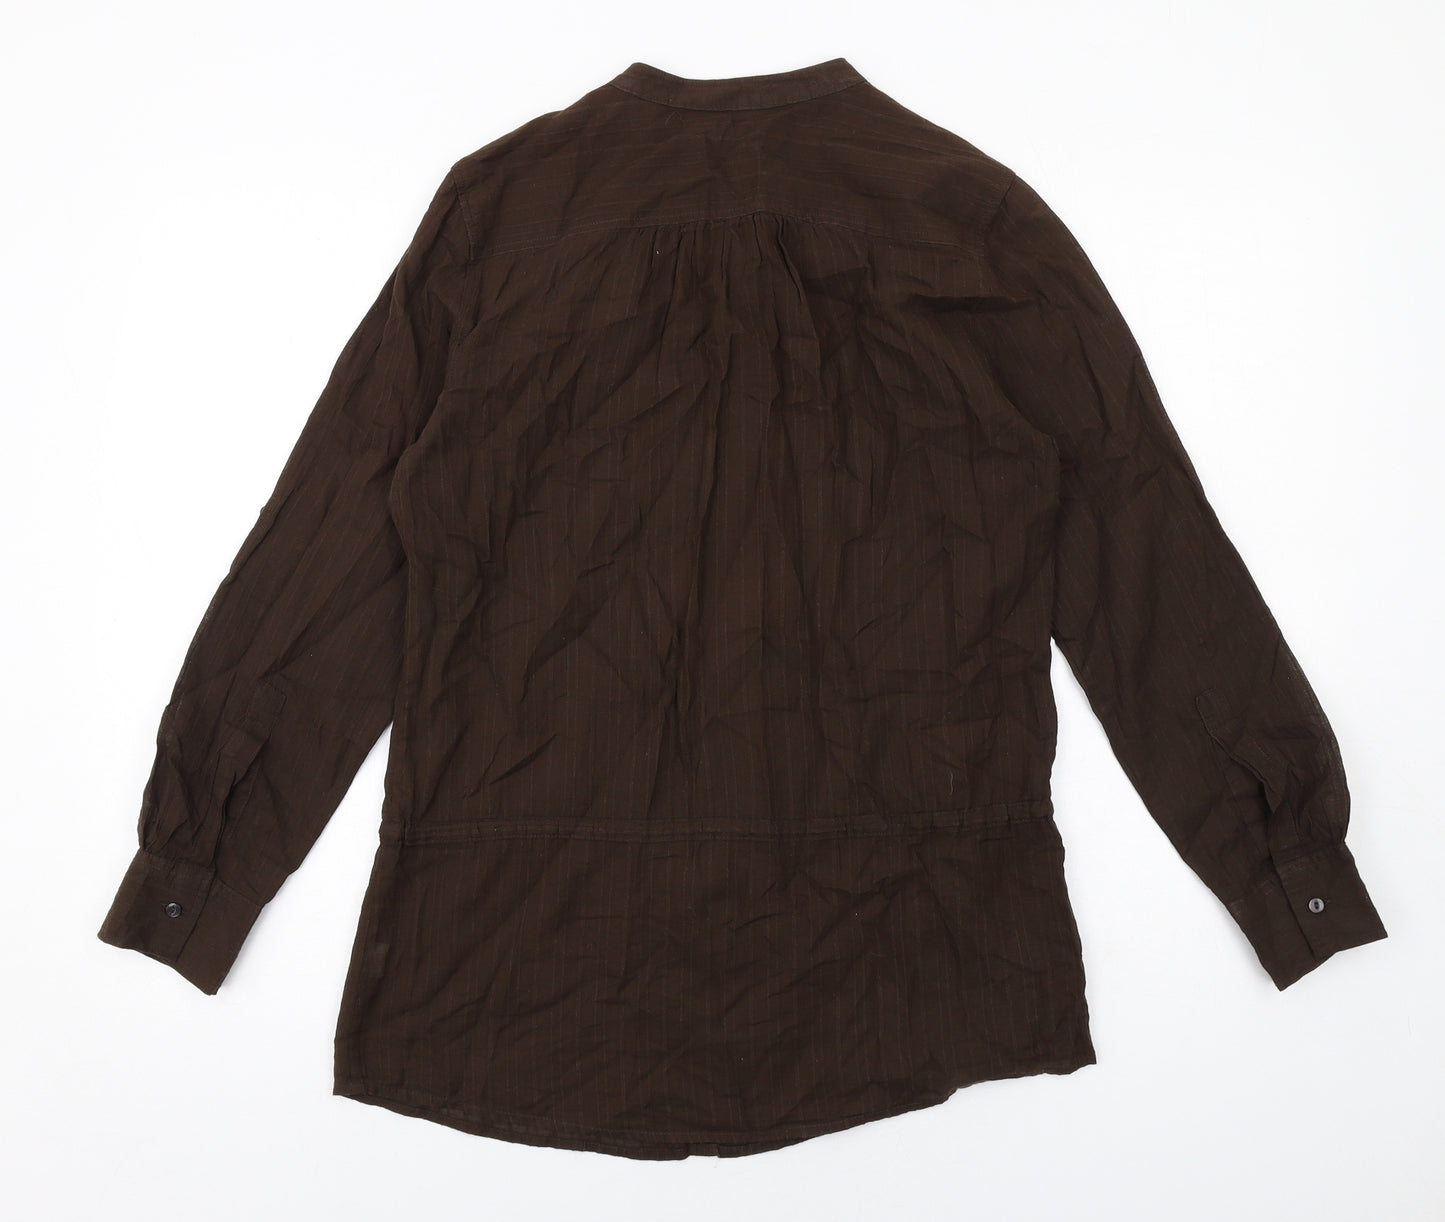 Gap Womens Brown Cotton Basic Button-Up Size S Round Neck